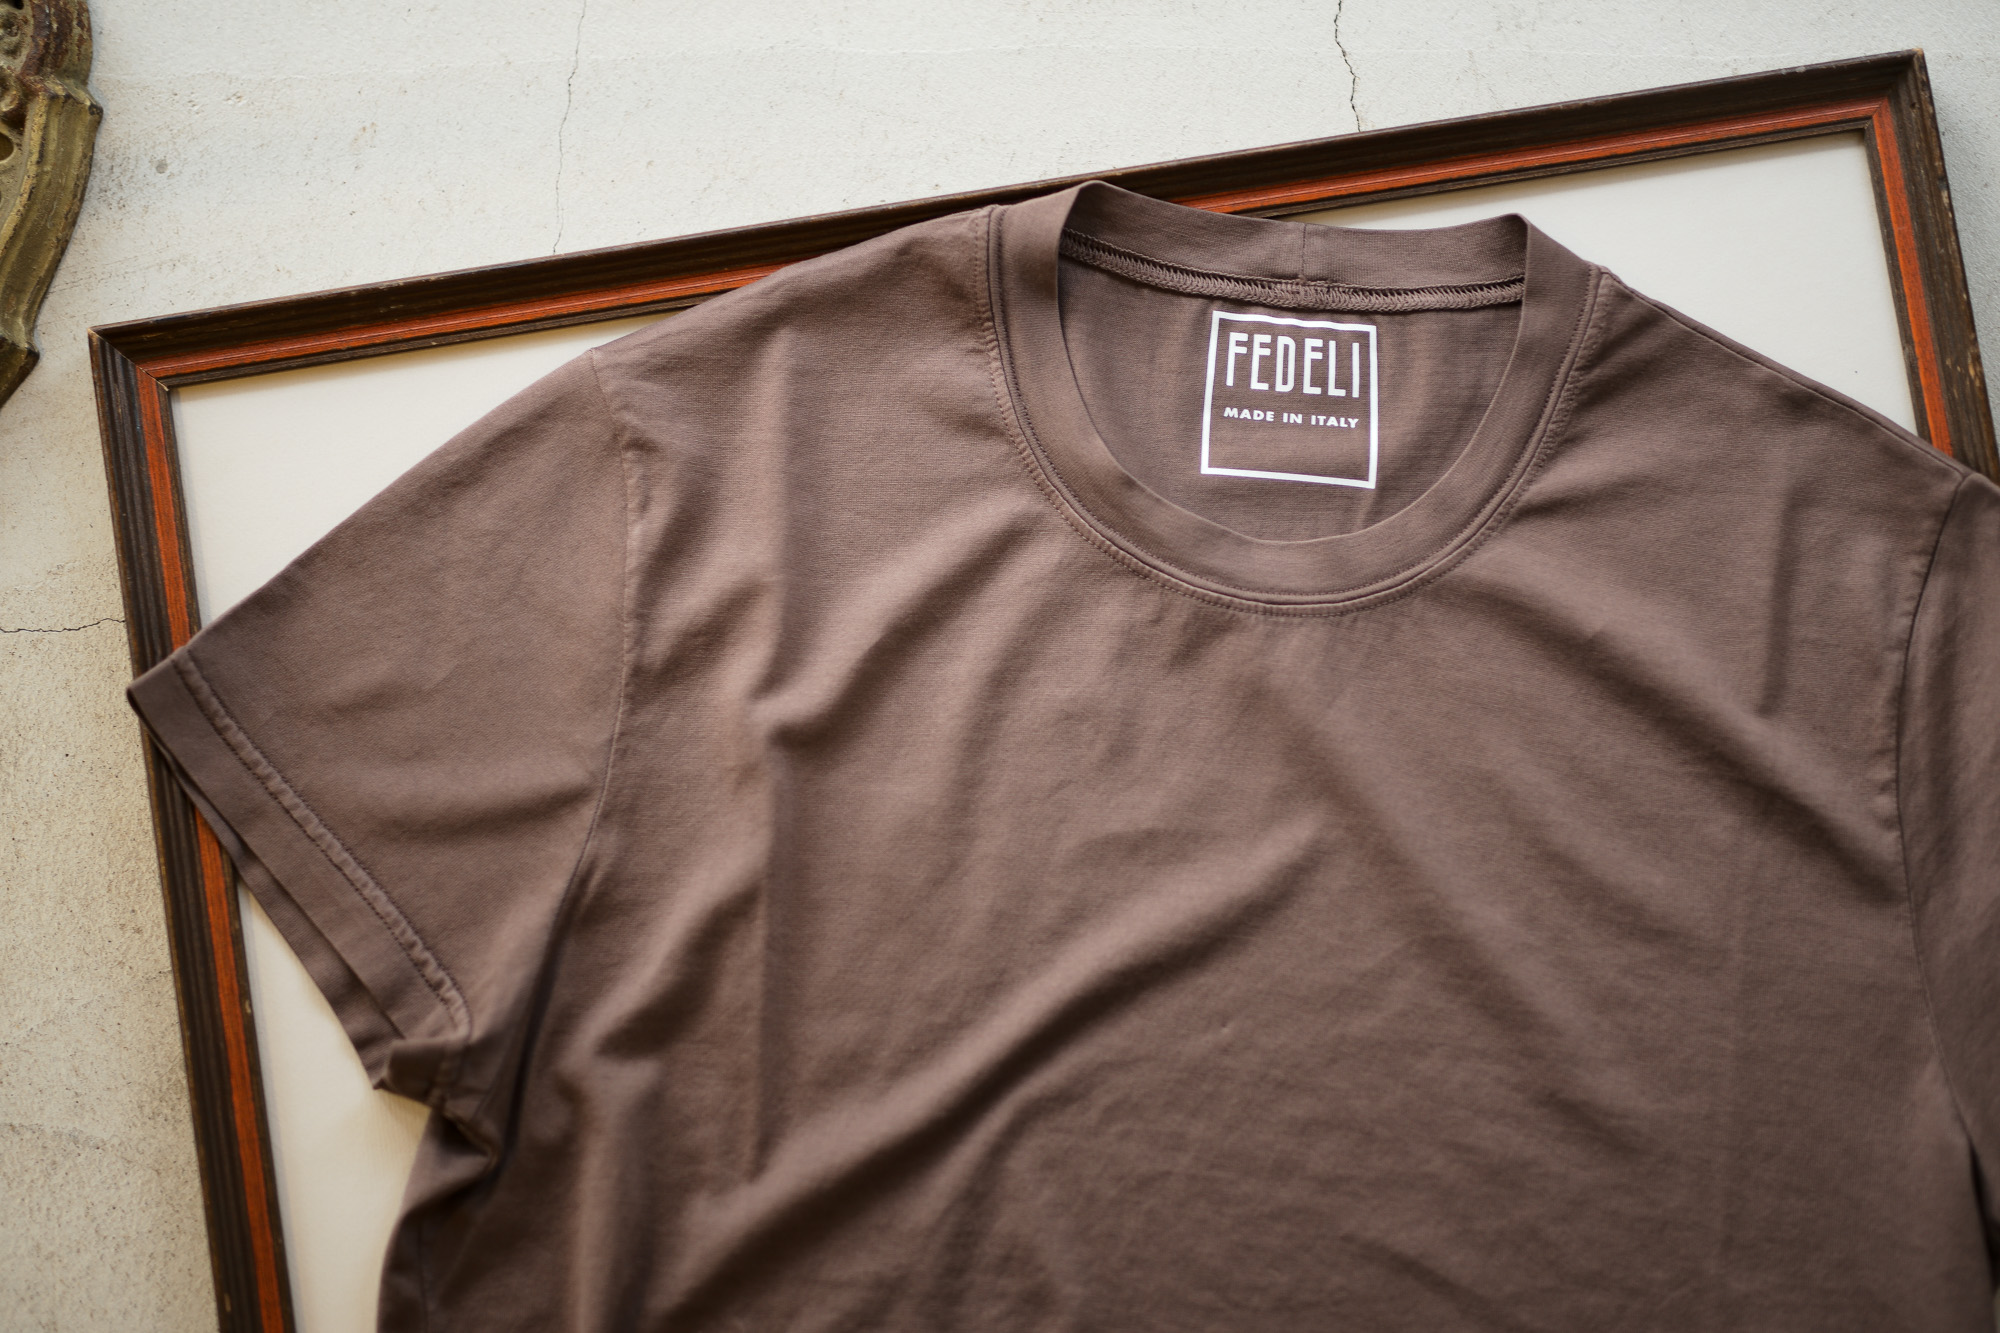 FEDELI (フェデーリ) Crew Neck T-shirt (クルーネック Tシャツ) ギザコットン Tシャツ BROWN (ブラウン・902) made in italy (イタリア製) 2019 春夏新作 愛知 名古屋　altoediritto アルトエデリット